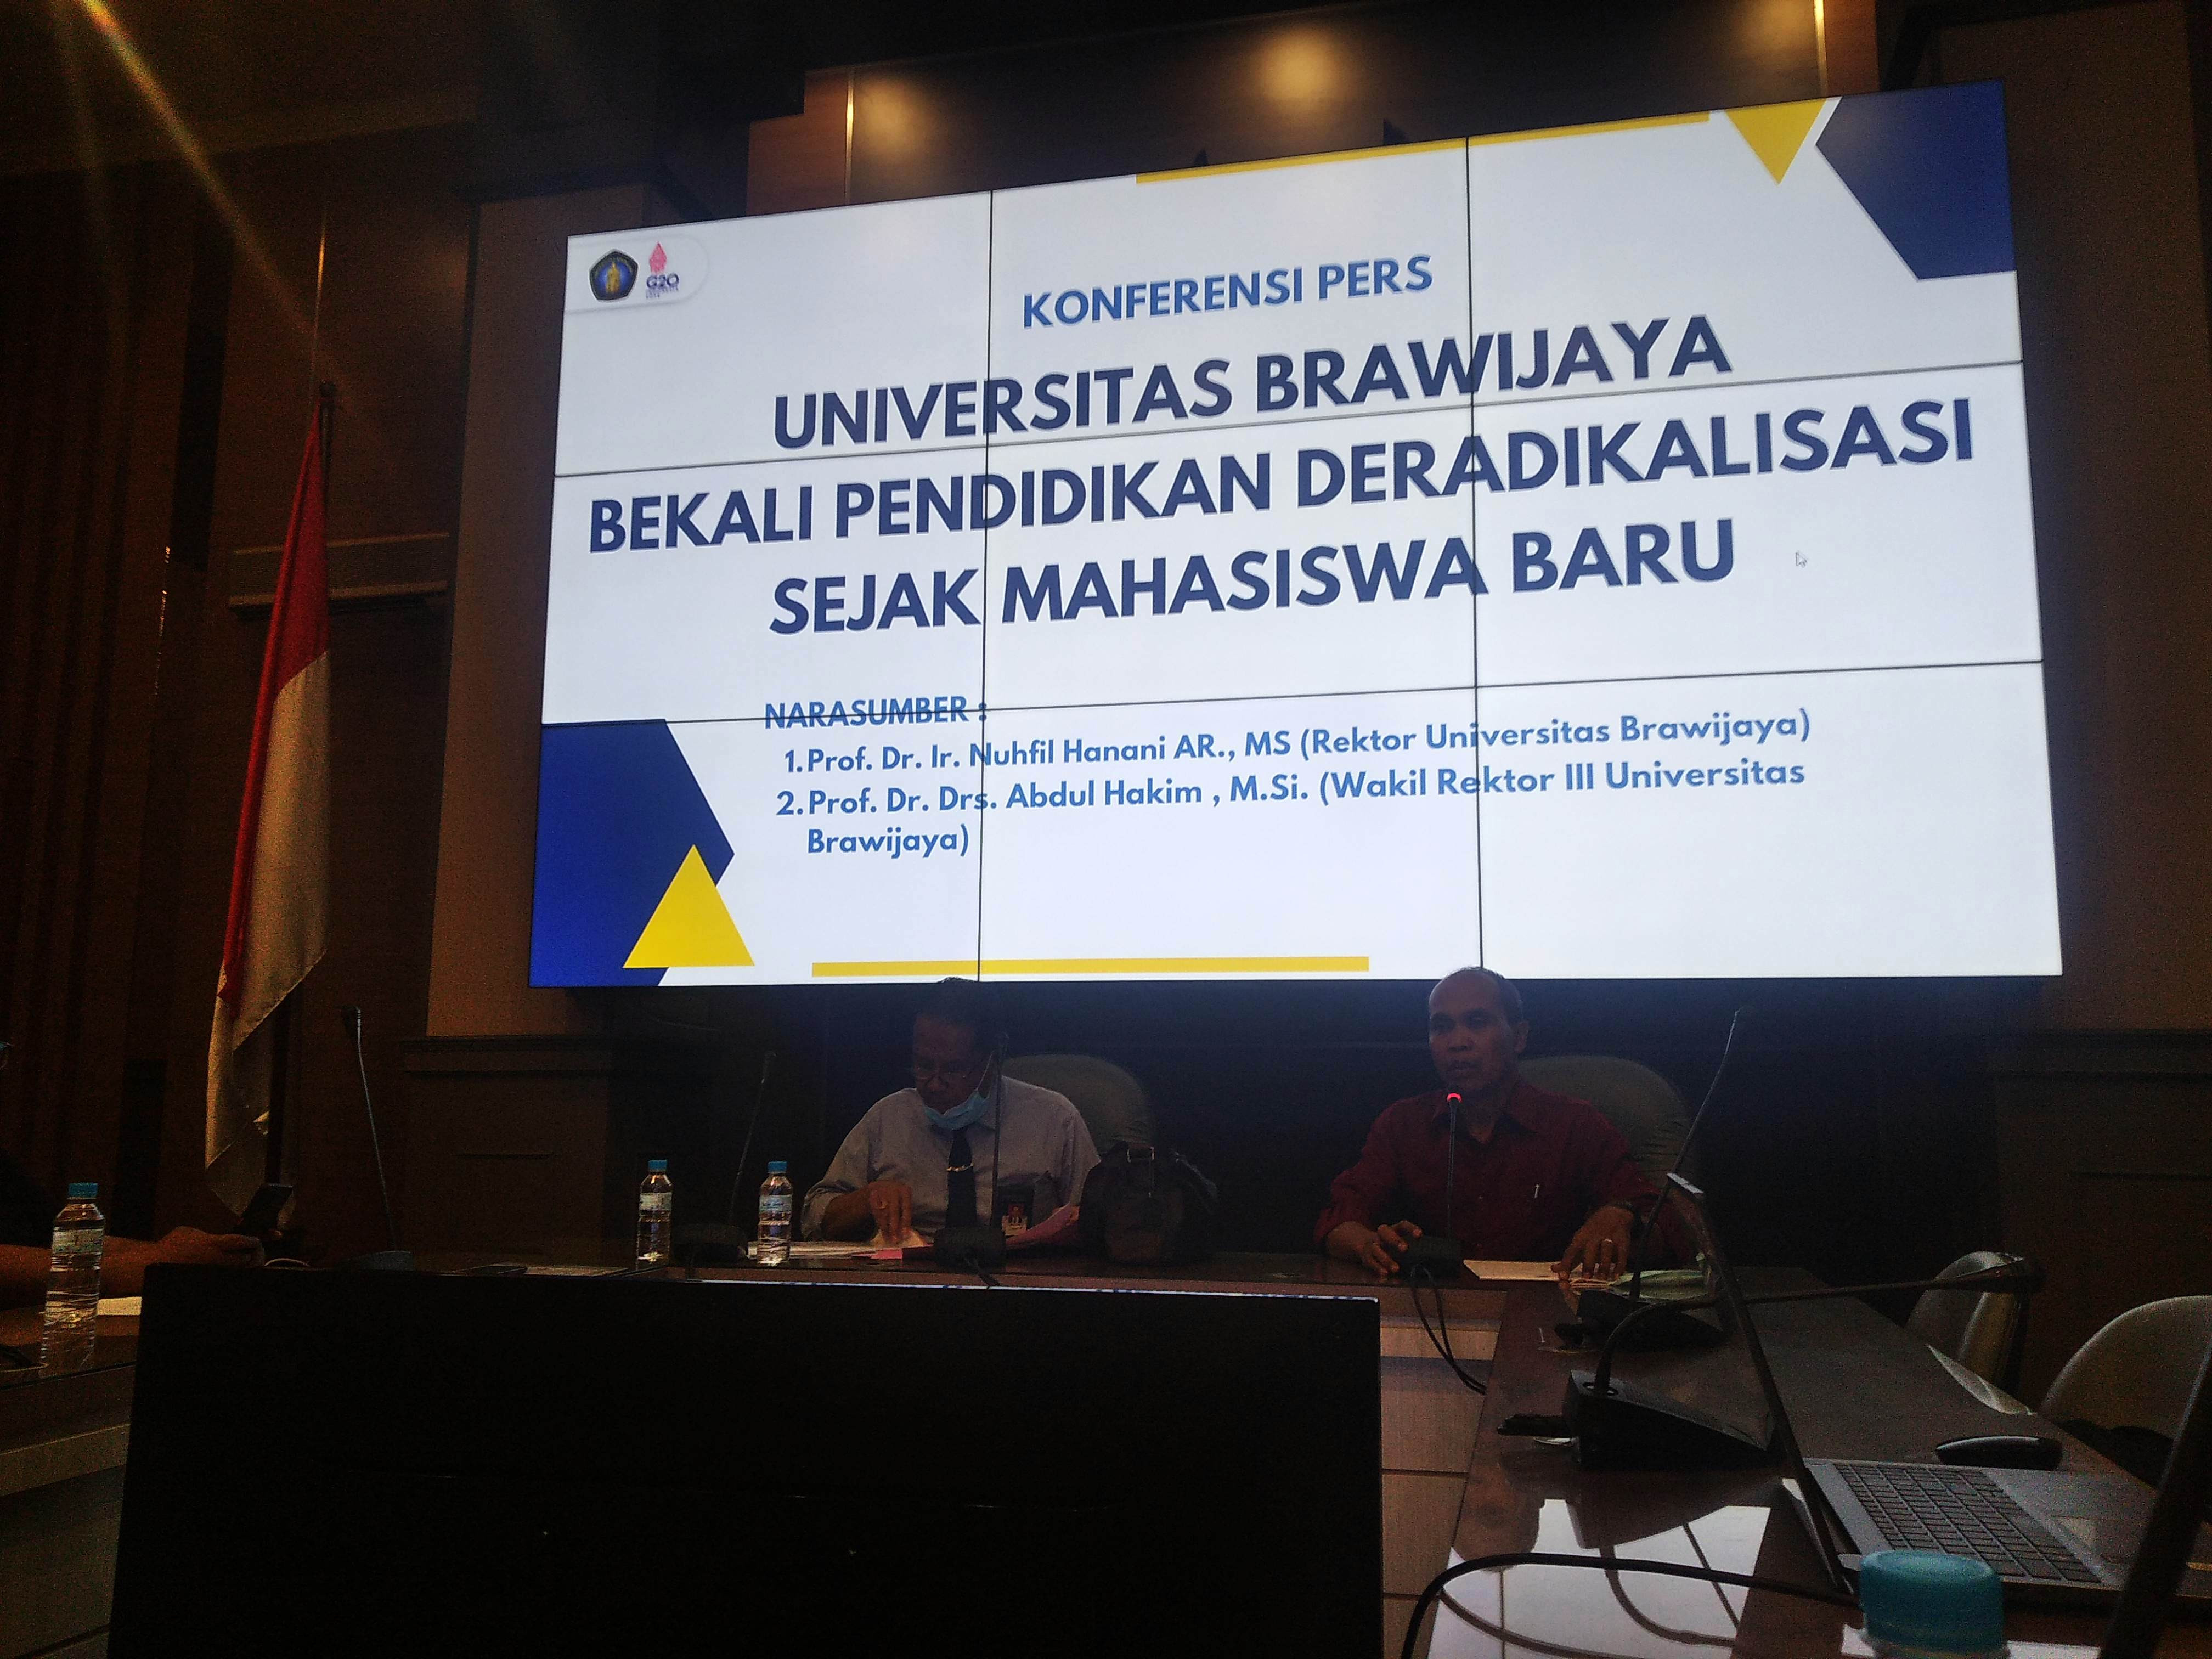 Antisipasi Radikalisasi, Rektorat UB Malang Jalin Kerja Sama dengan Kepolisian & Militer - JPNN.com Jatim